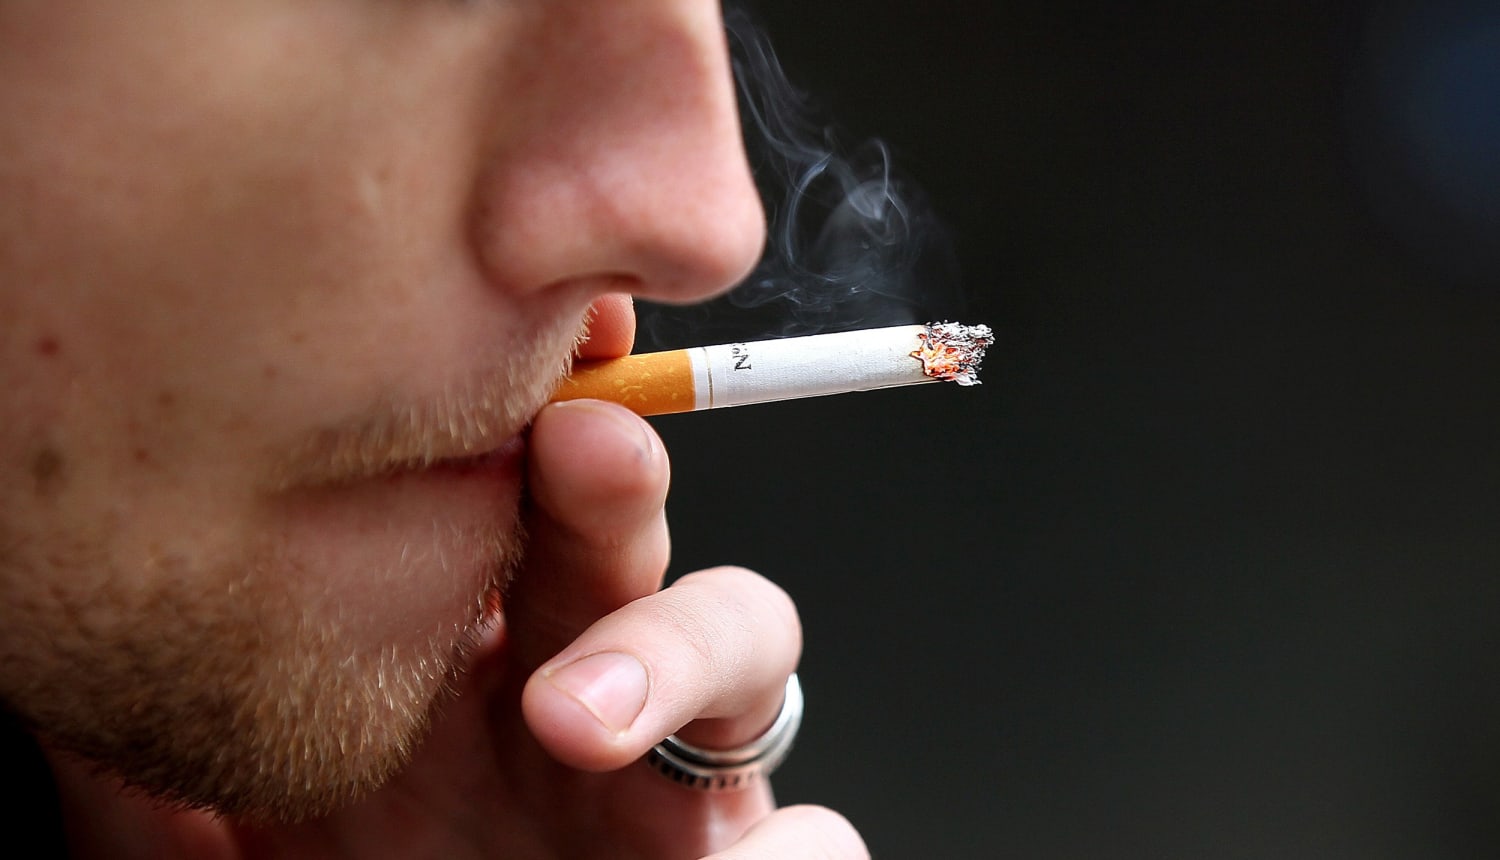 Just One Cigarette Raises Heart Disease Risk Study Finds